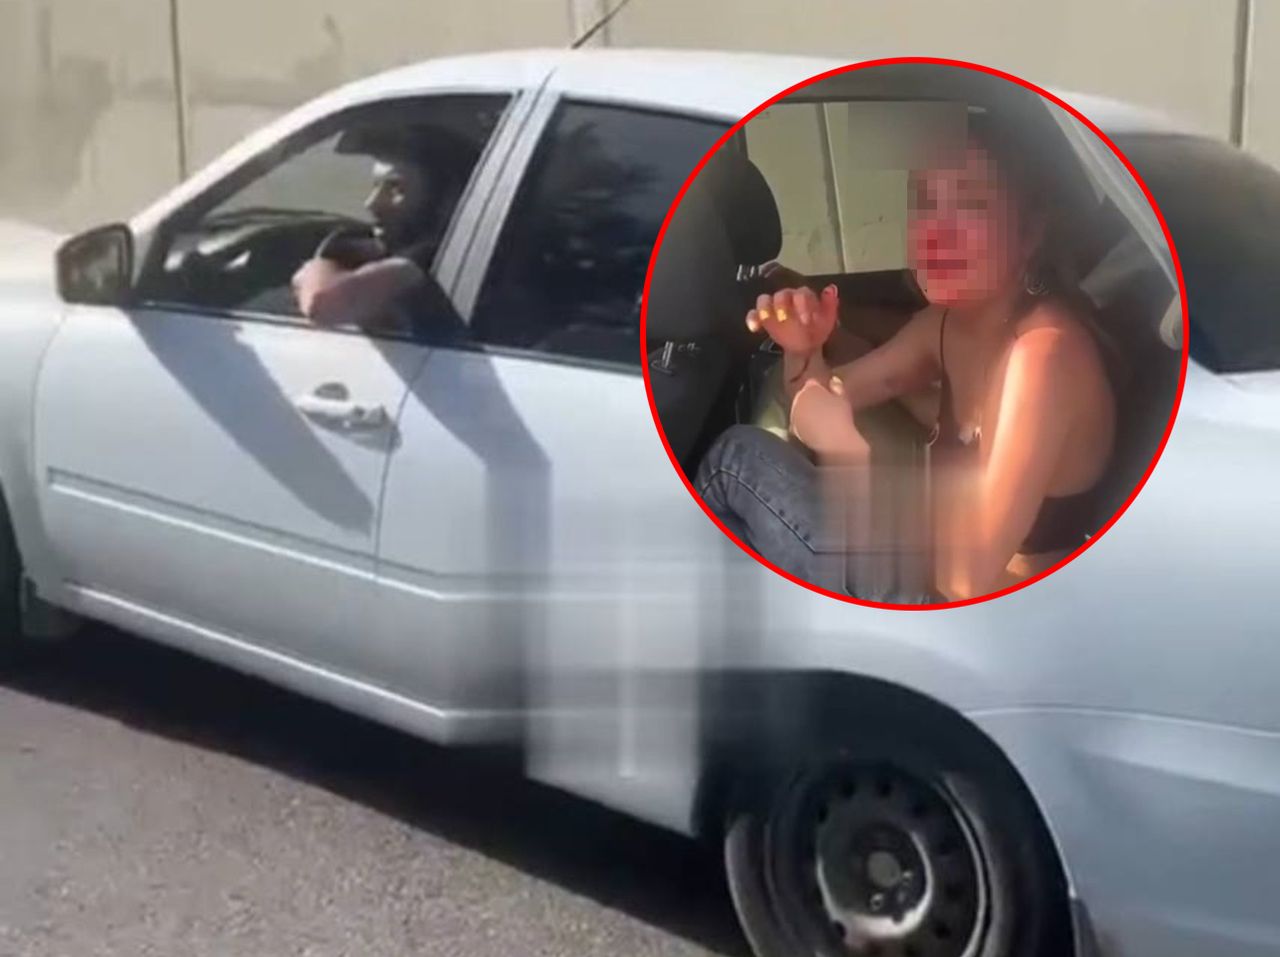 Krasnodar street brutality: Woman assaulted, forced into car